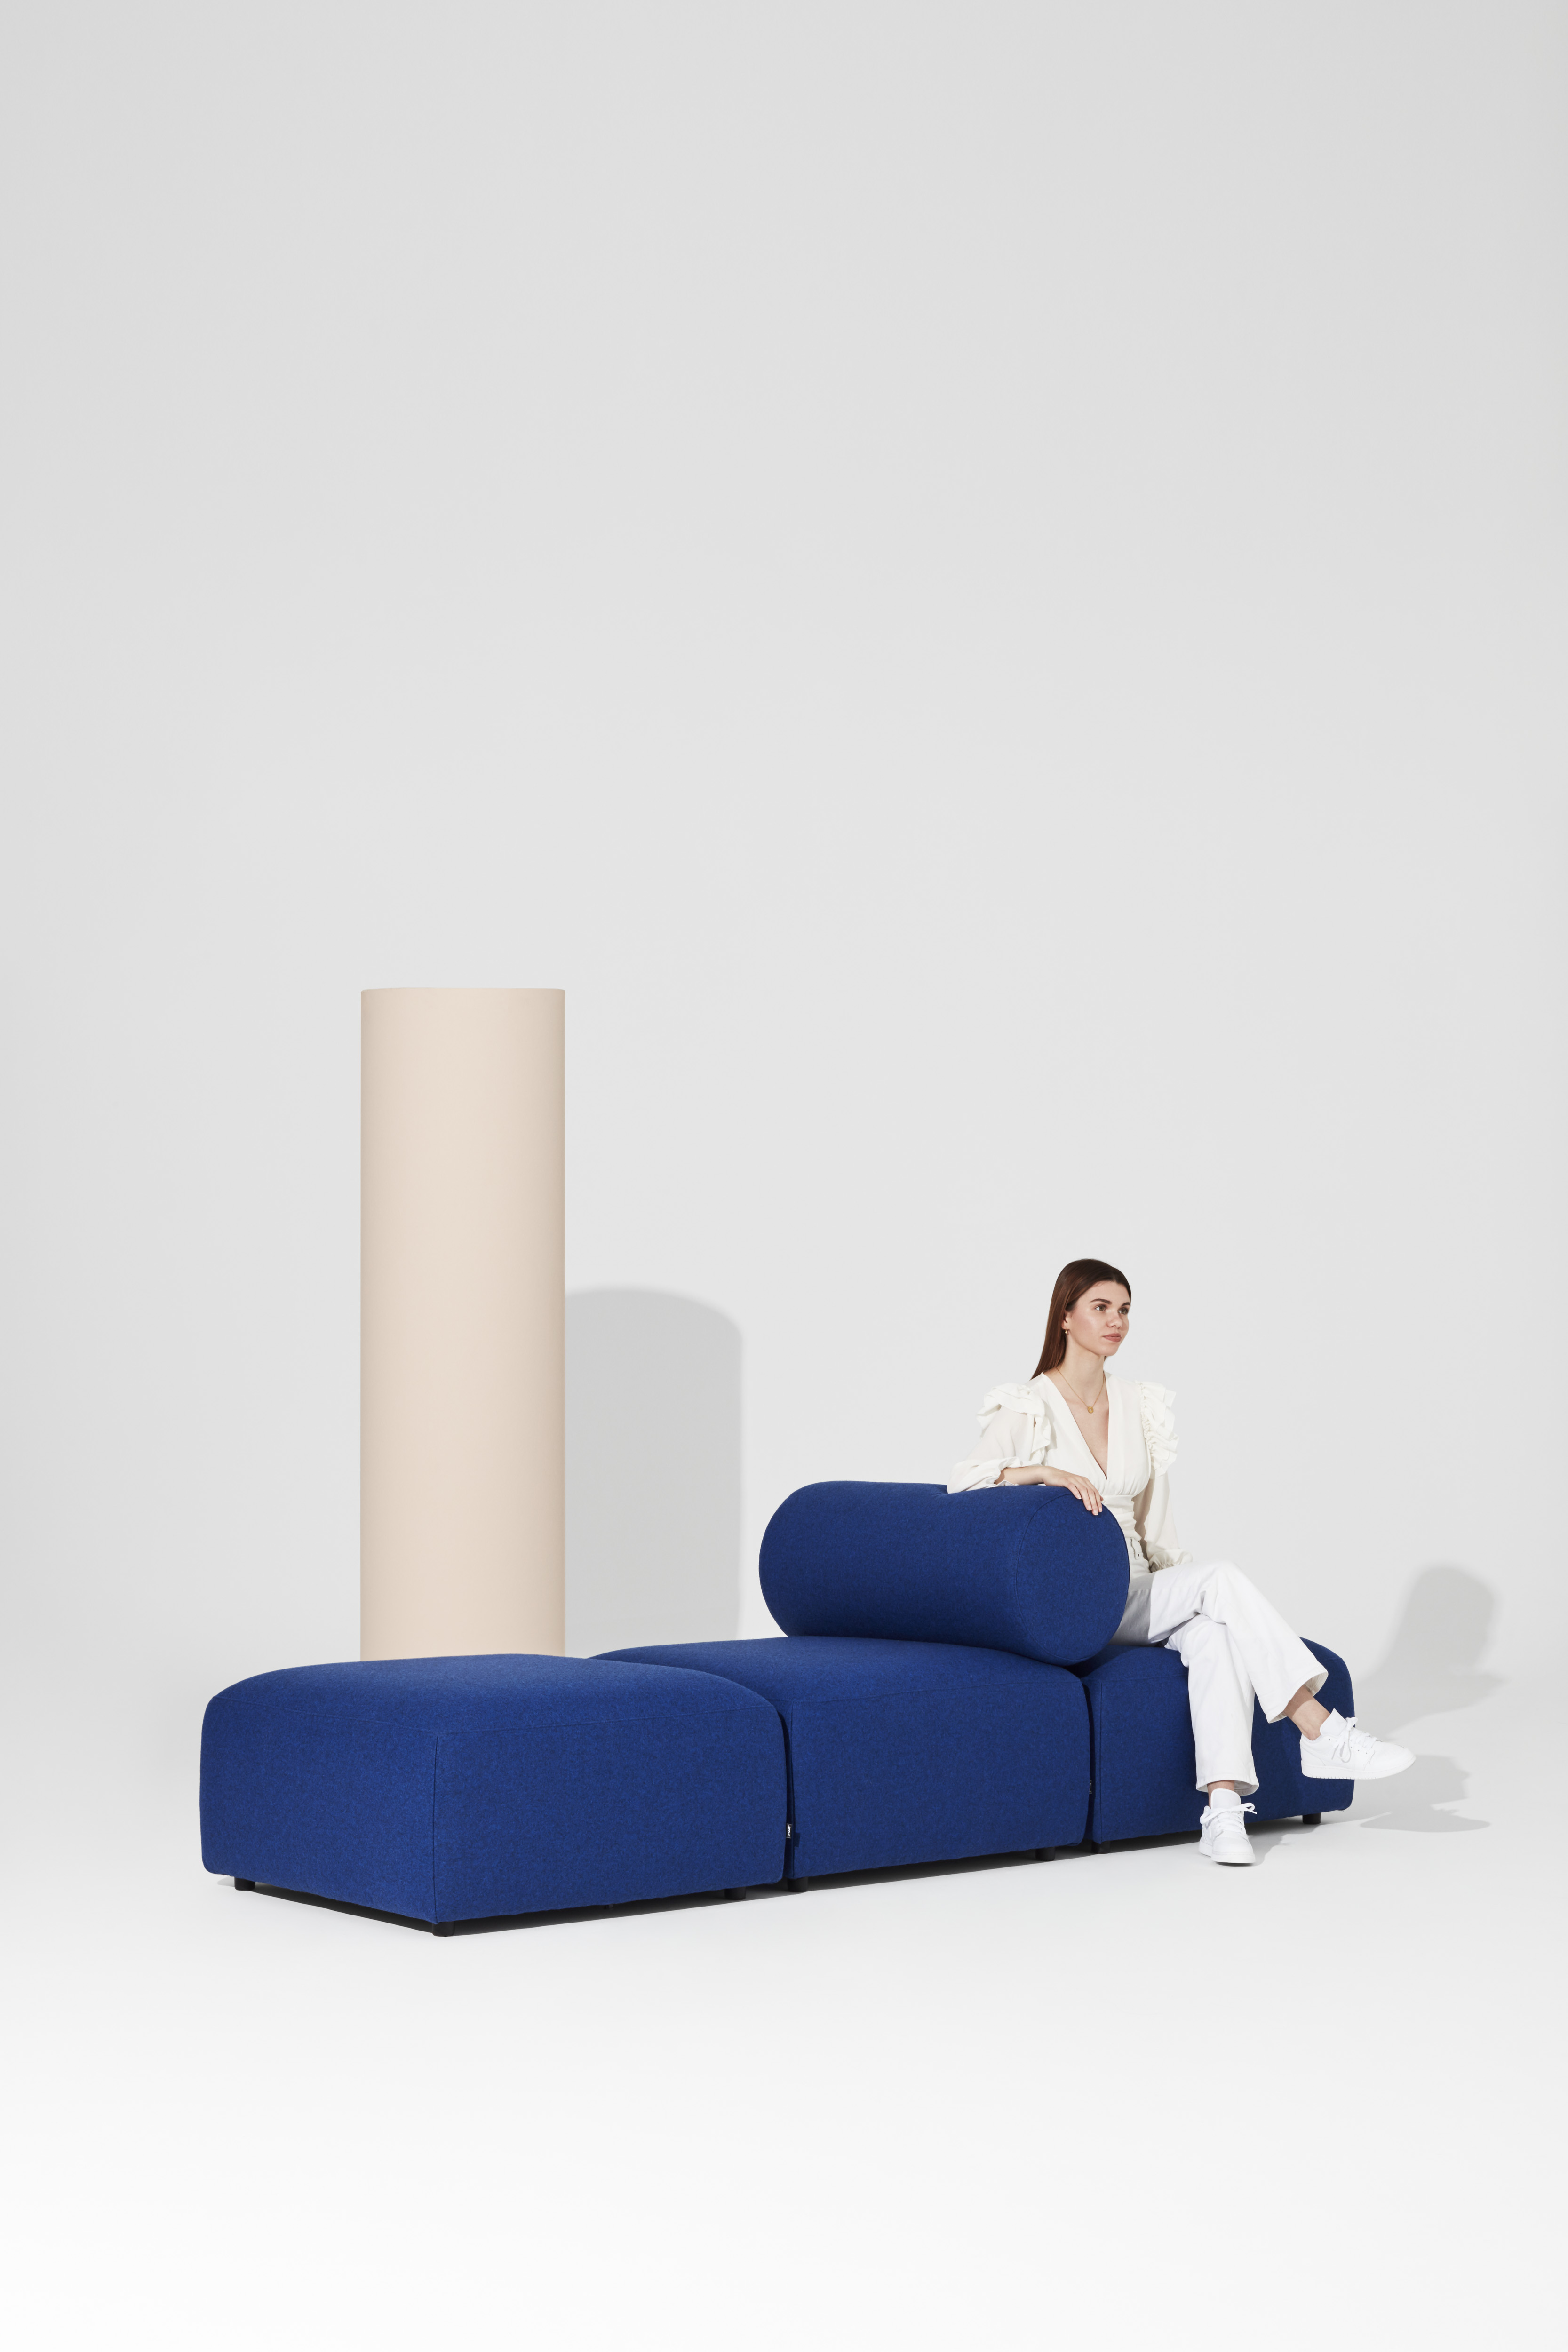 OFFO sofa by Arnau Reyna - Creative Work